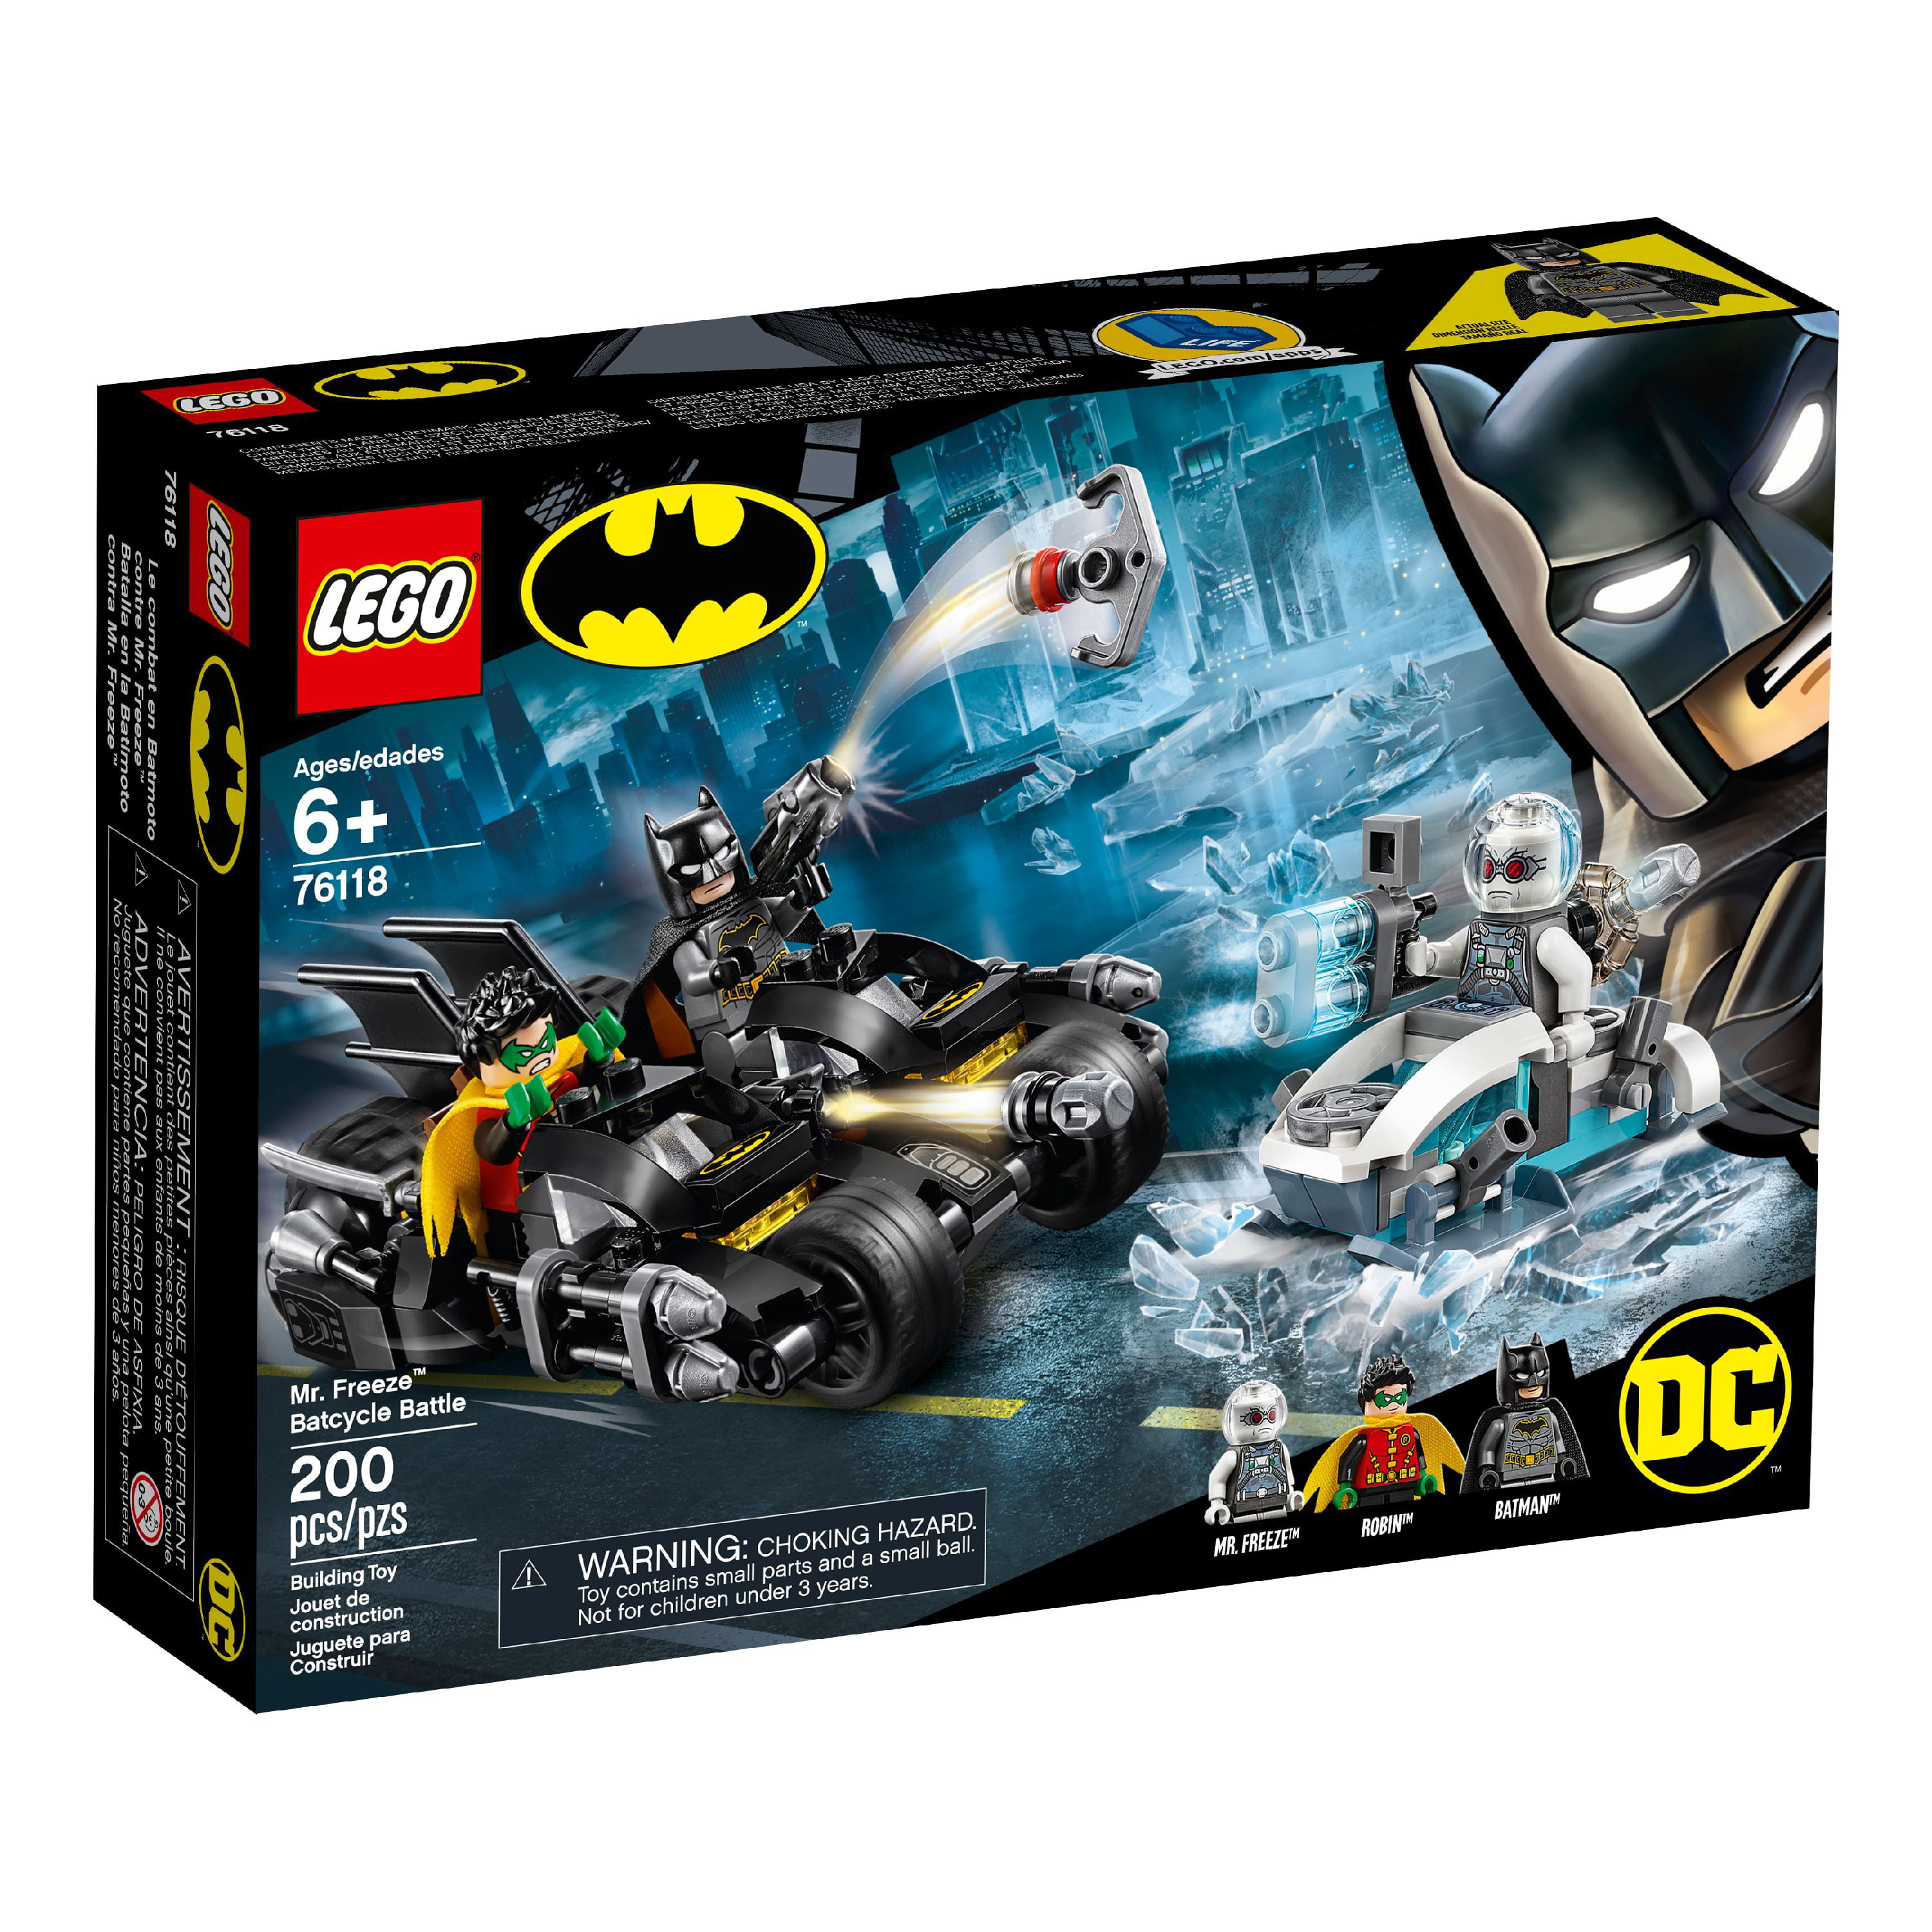 Freeze Limited Editon in Polybag Neu und OVP 1 Lego Batman Figur 212007 Mr 